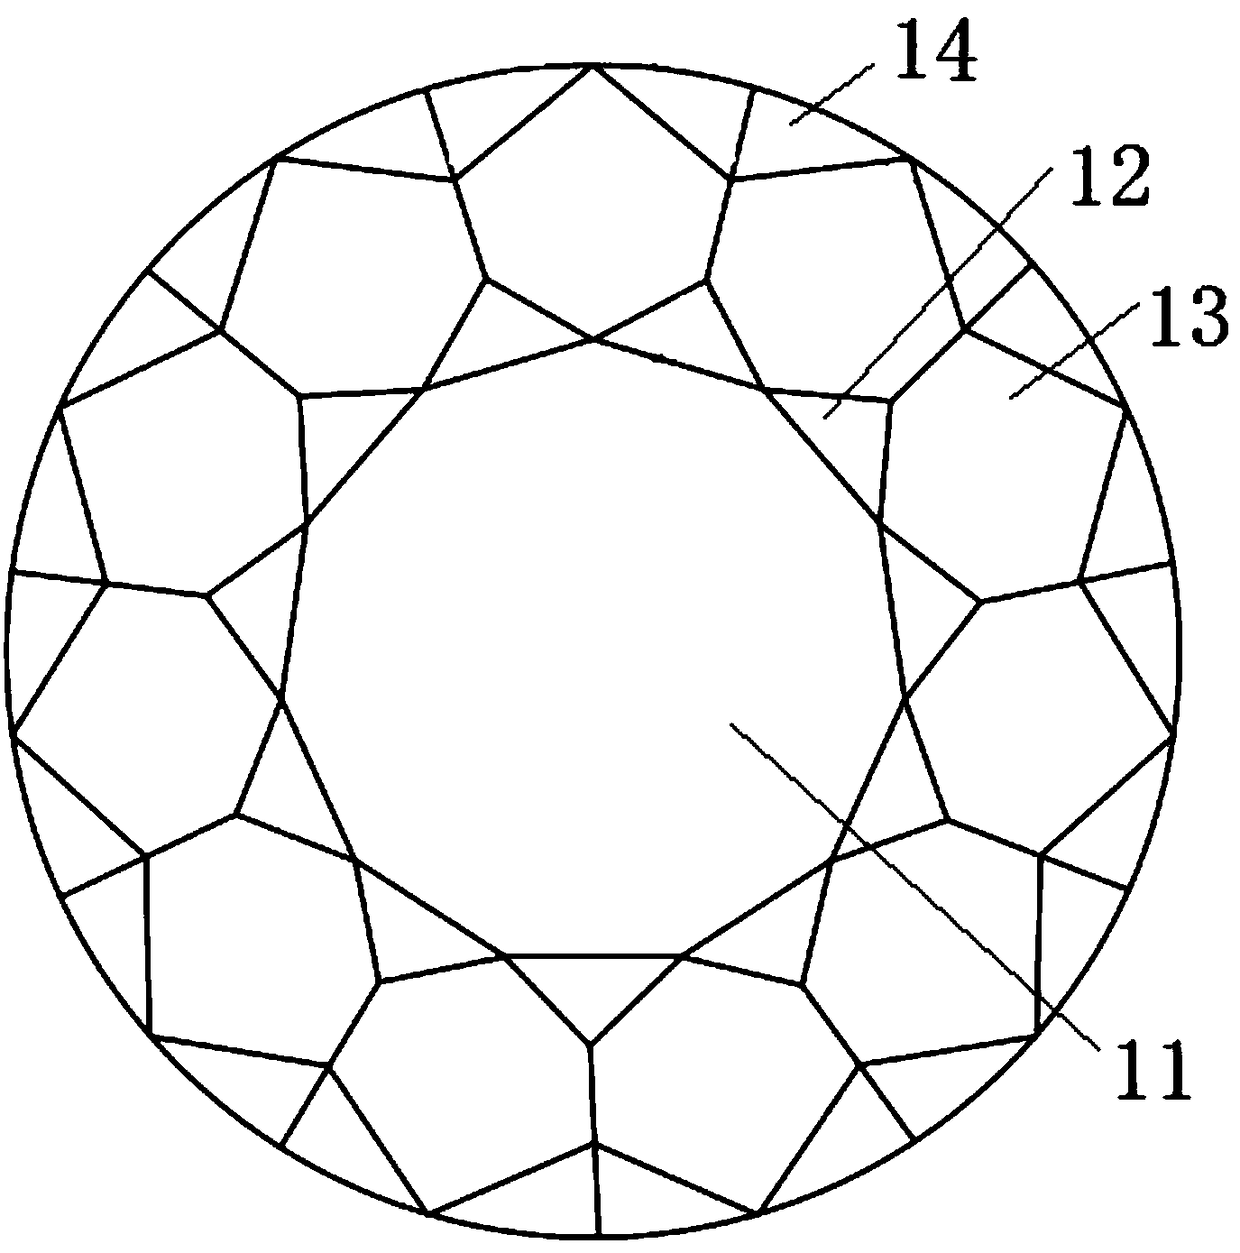 Diamond structure